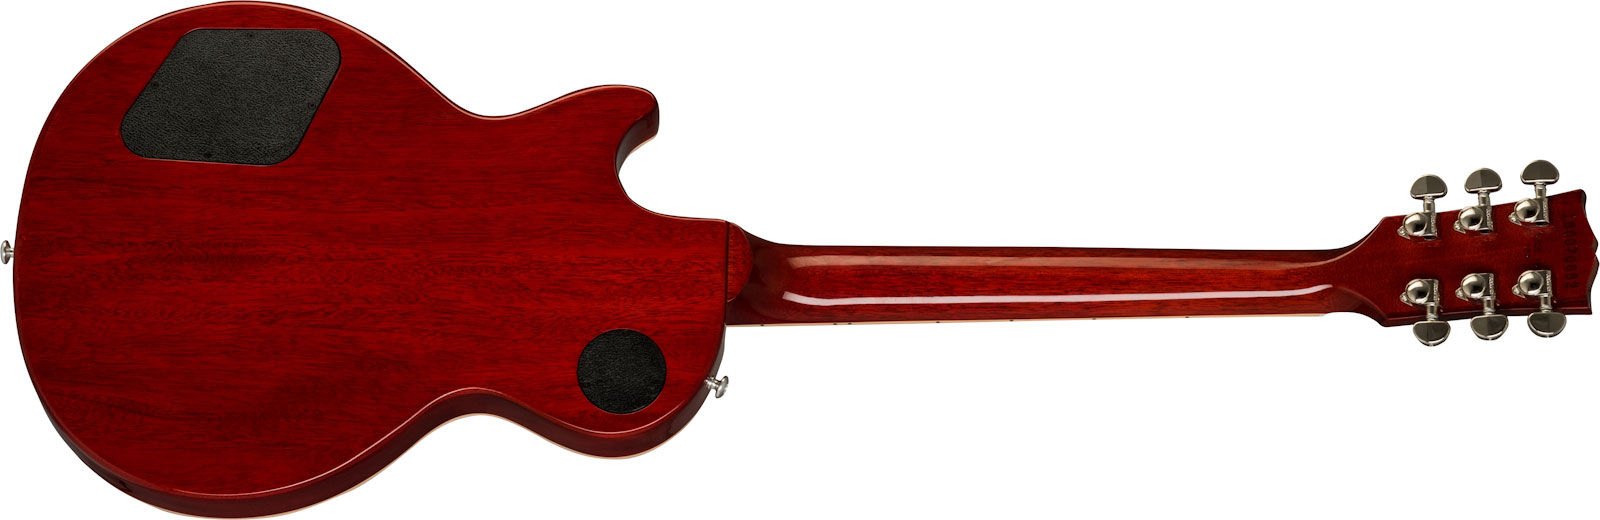 Gibson Les Paul Classic Modern 2019 2h Ht Rw - Heritage Cherry Sunburst - Enkel gesneden elektrische gitaar - Variation 1